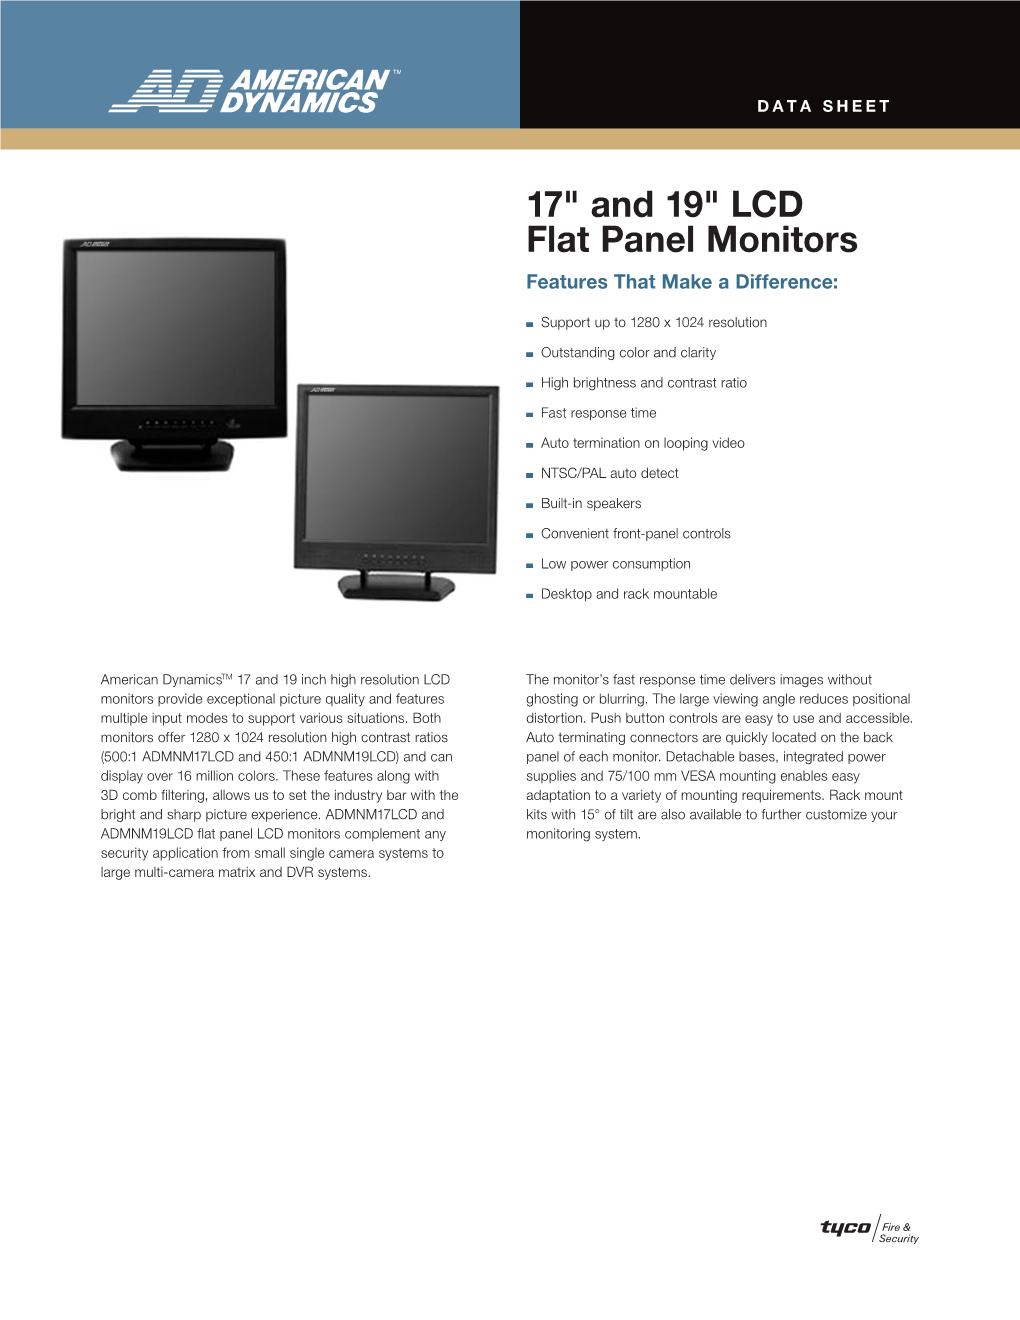 ADMNM 17" and 19" LCD Monitor Data Sheet A4